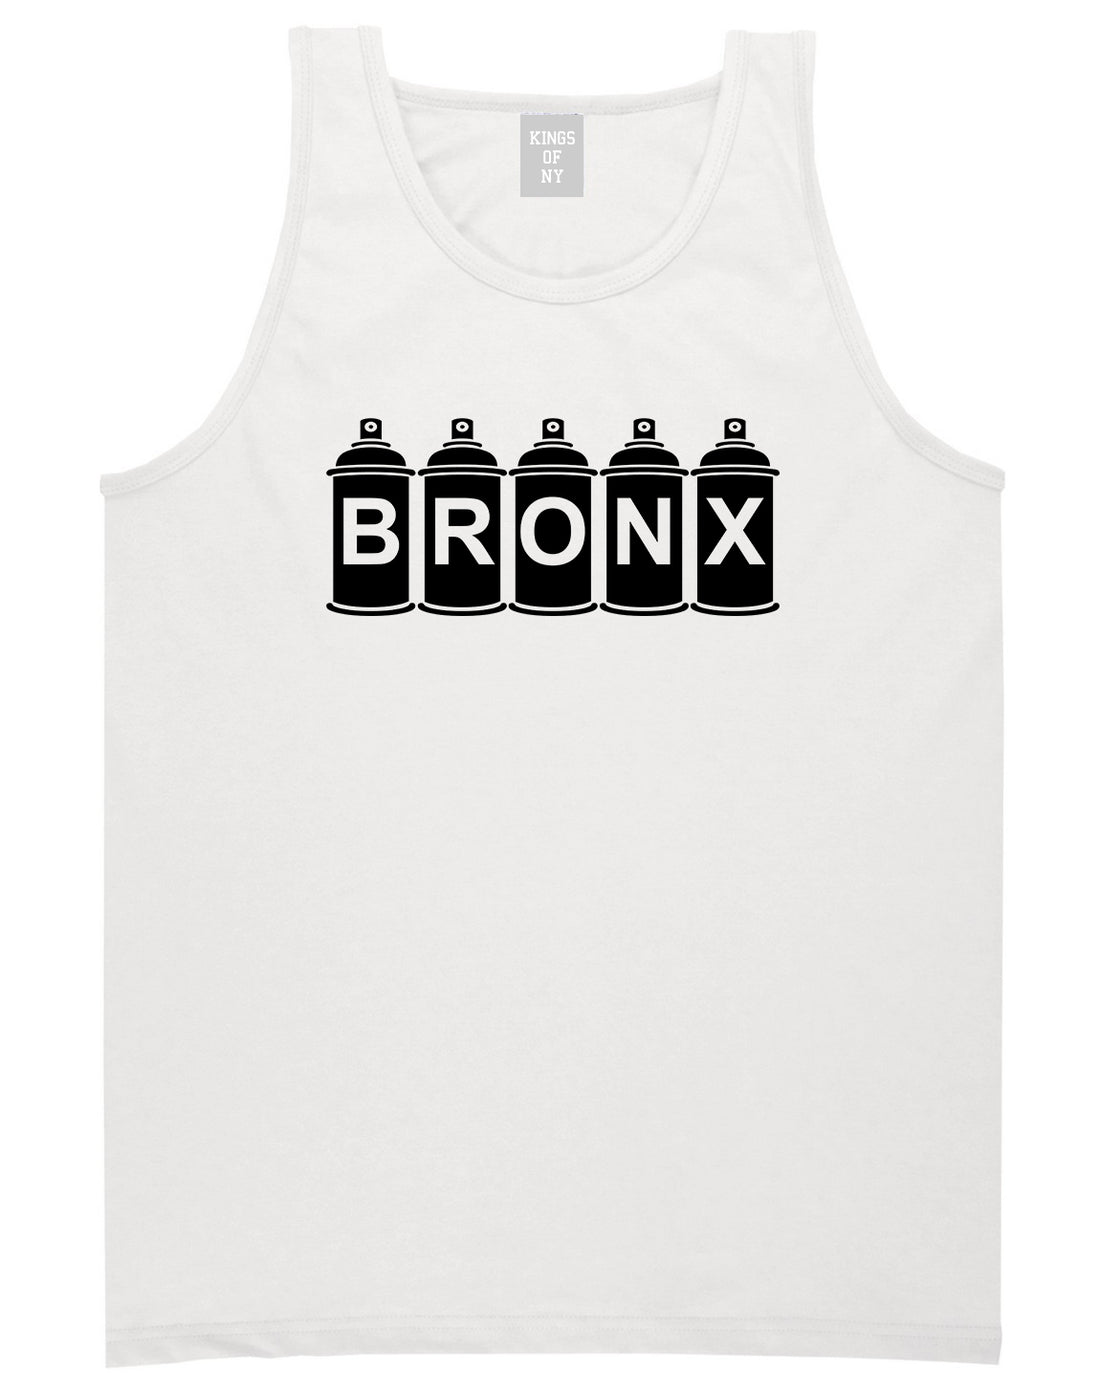 Bronx Graffiti Art Spray Can NY Mens Tank Top T-Shirt White